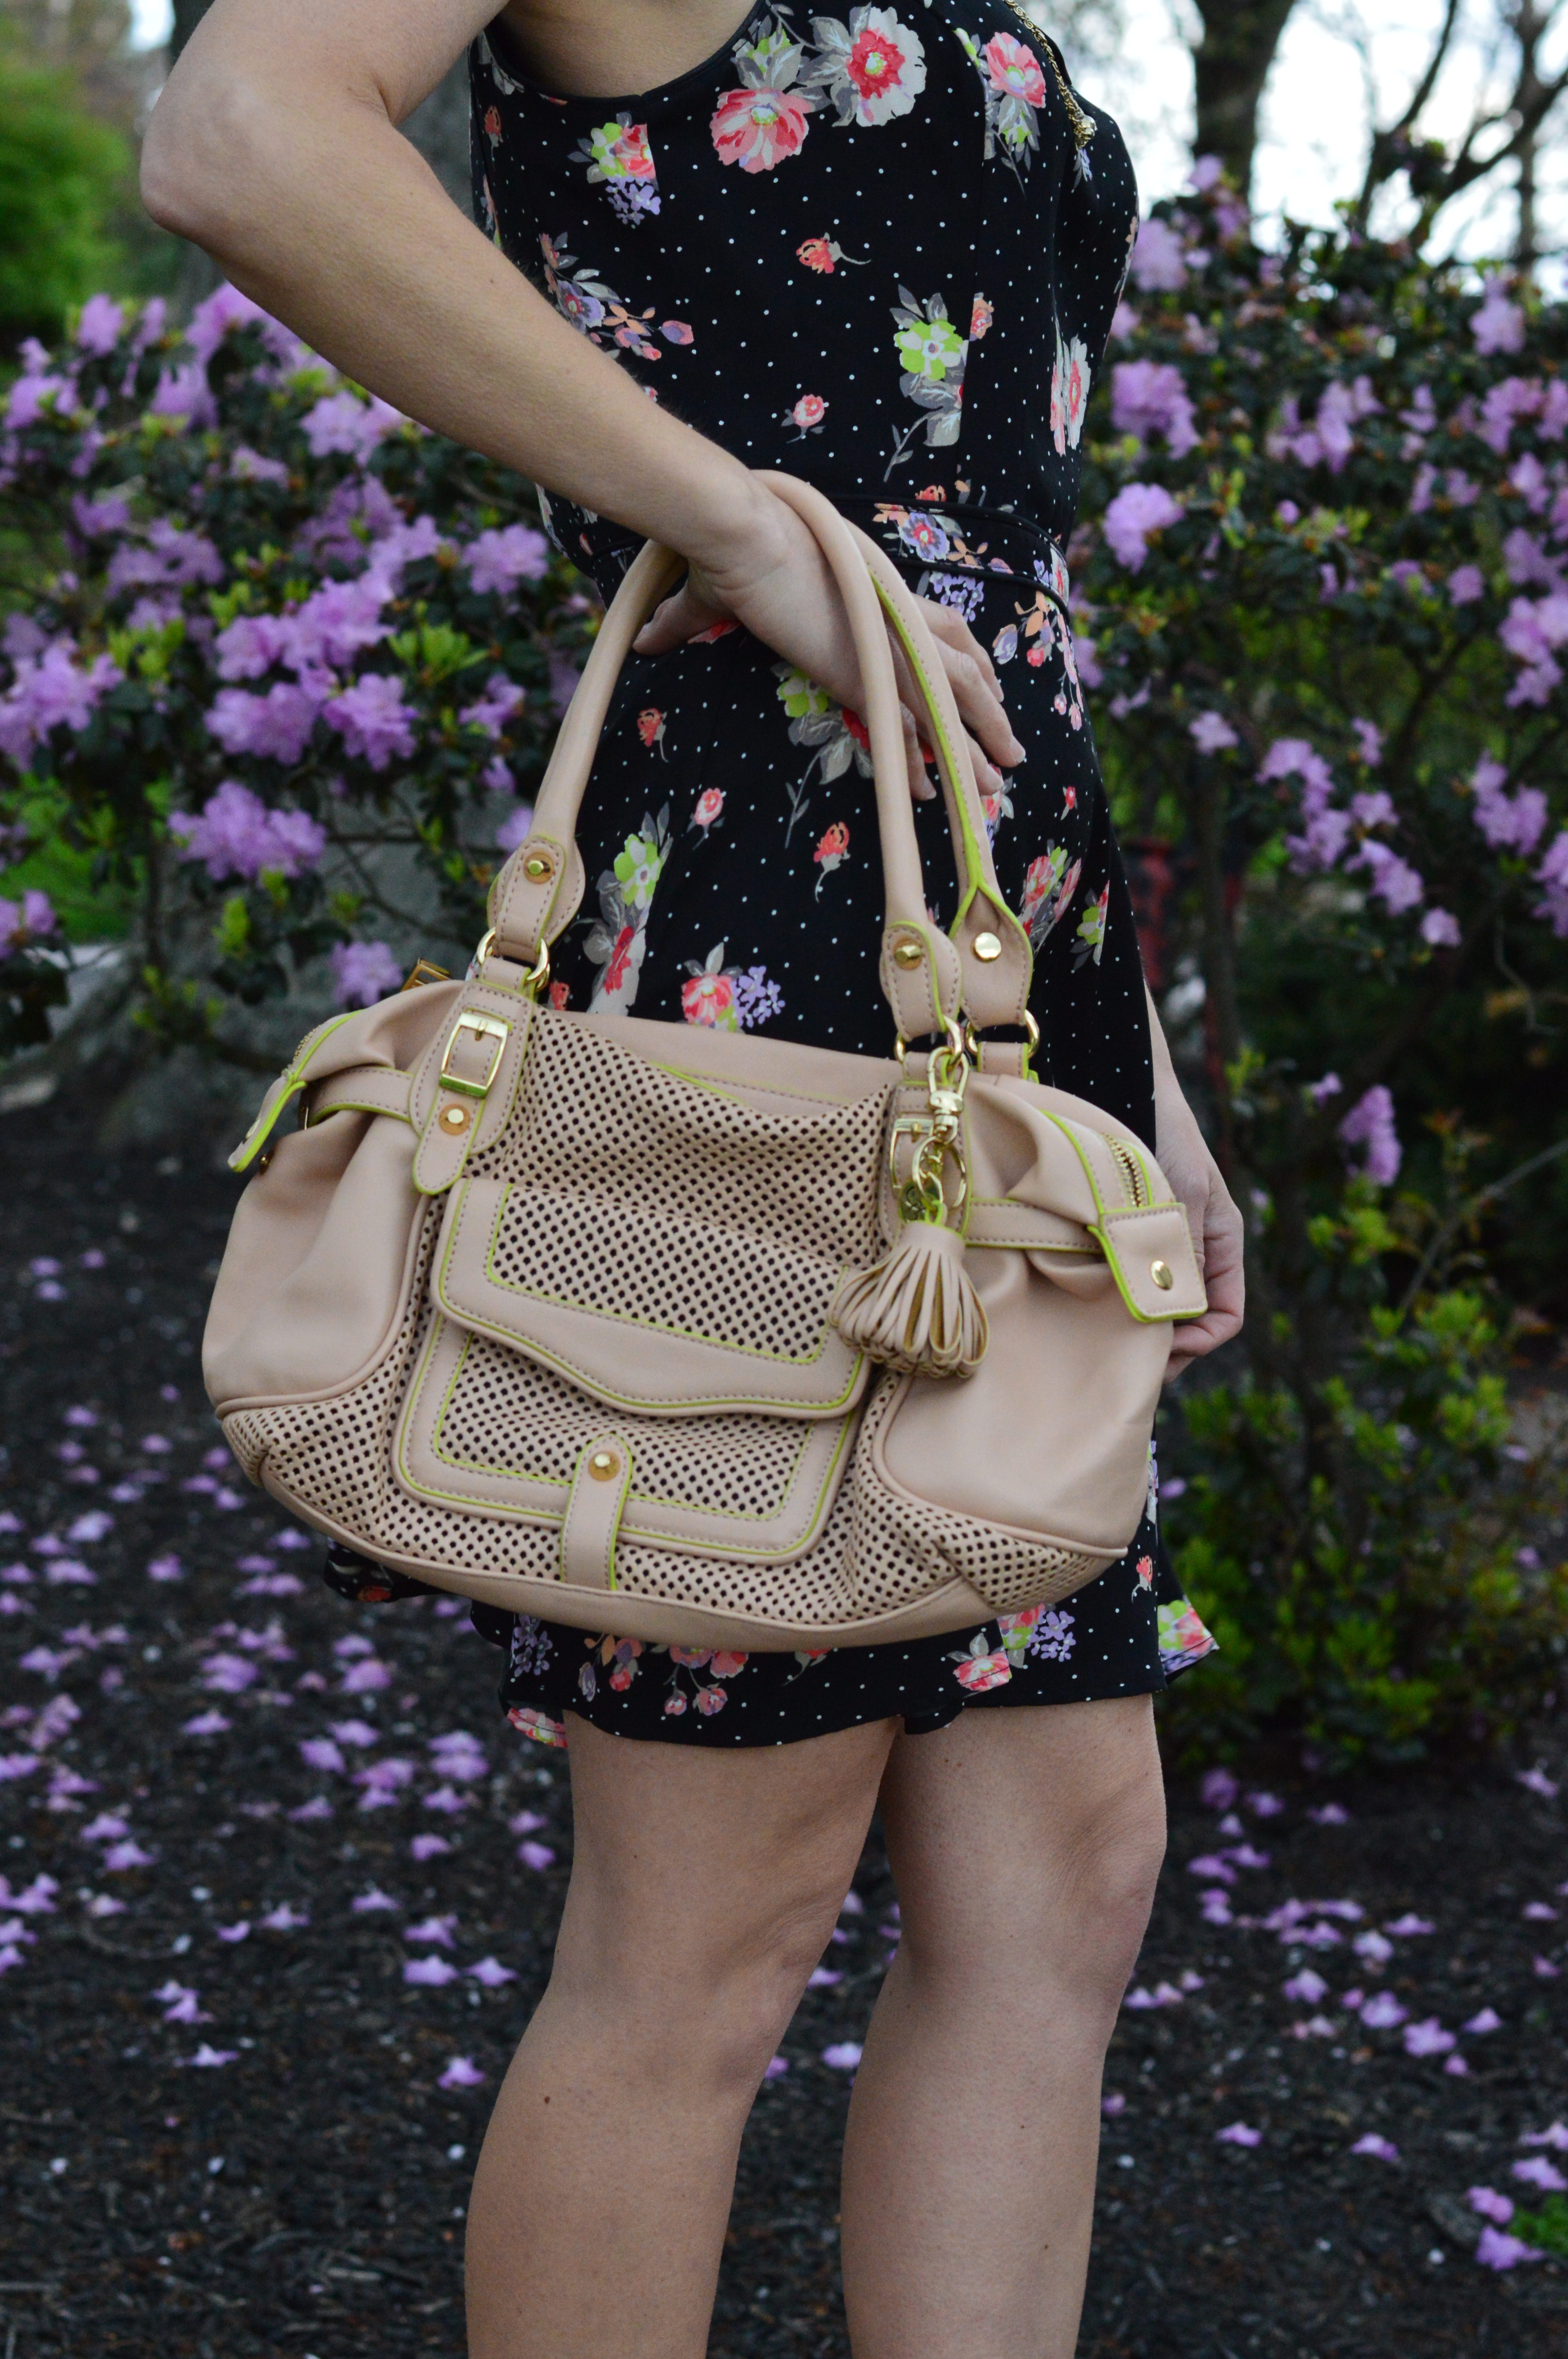 Jessica Simpson Handbags On Sale Up To 90% Off Retail